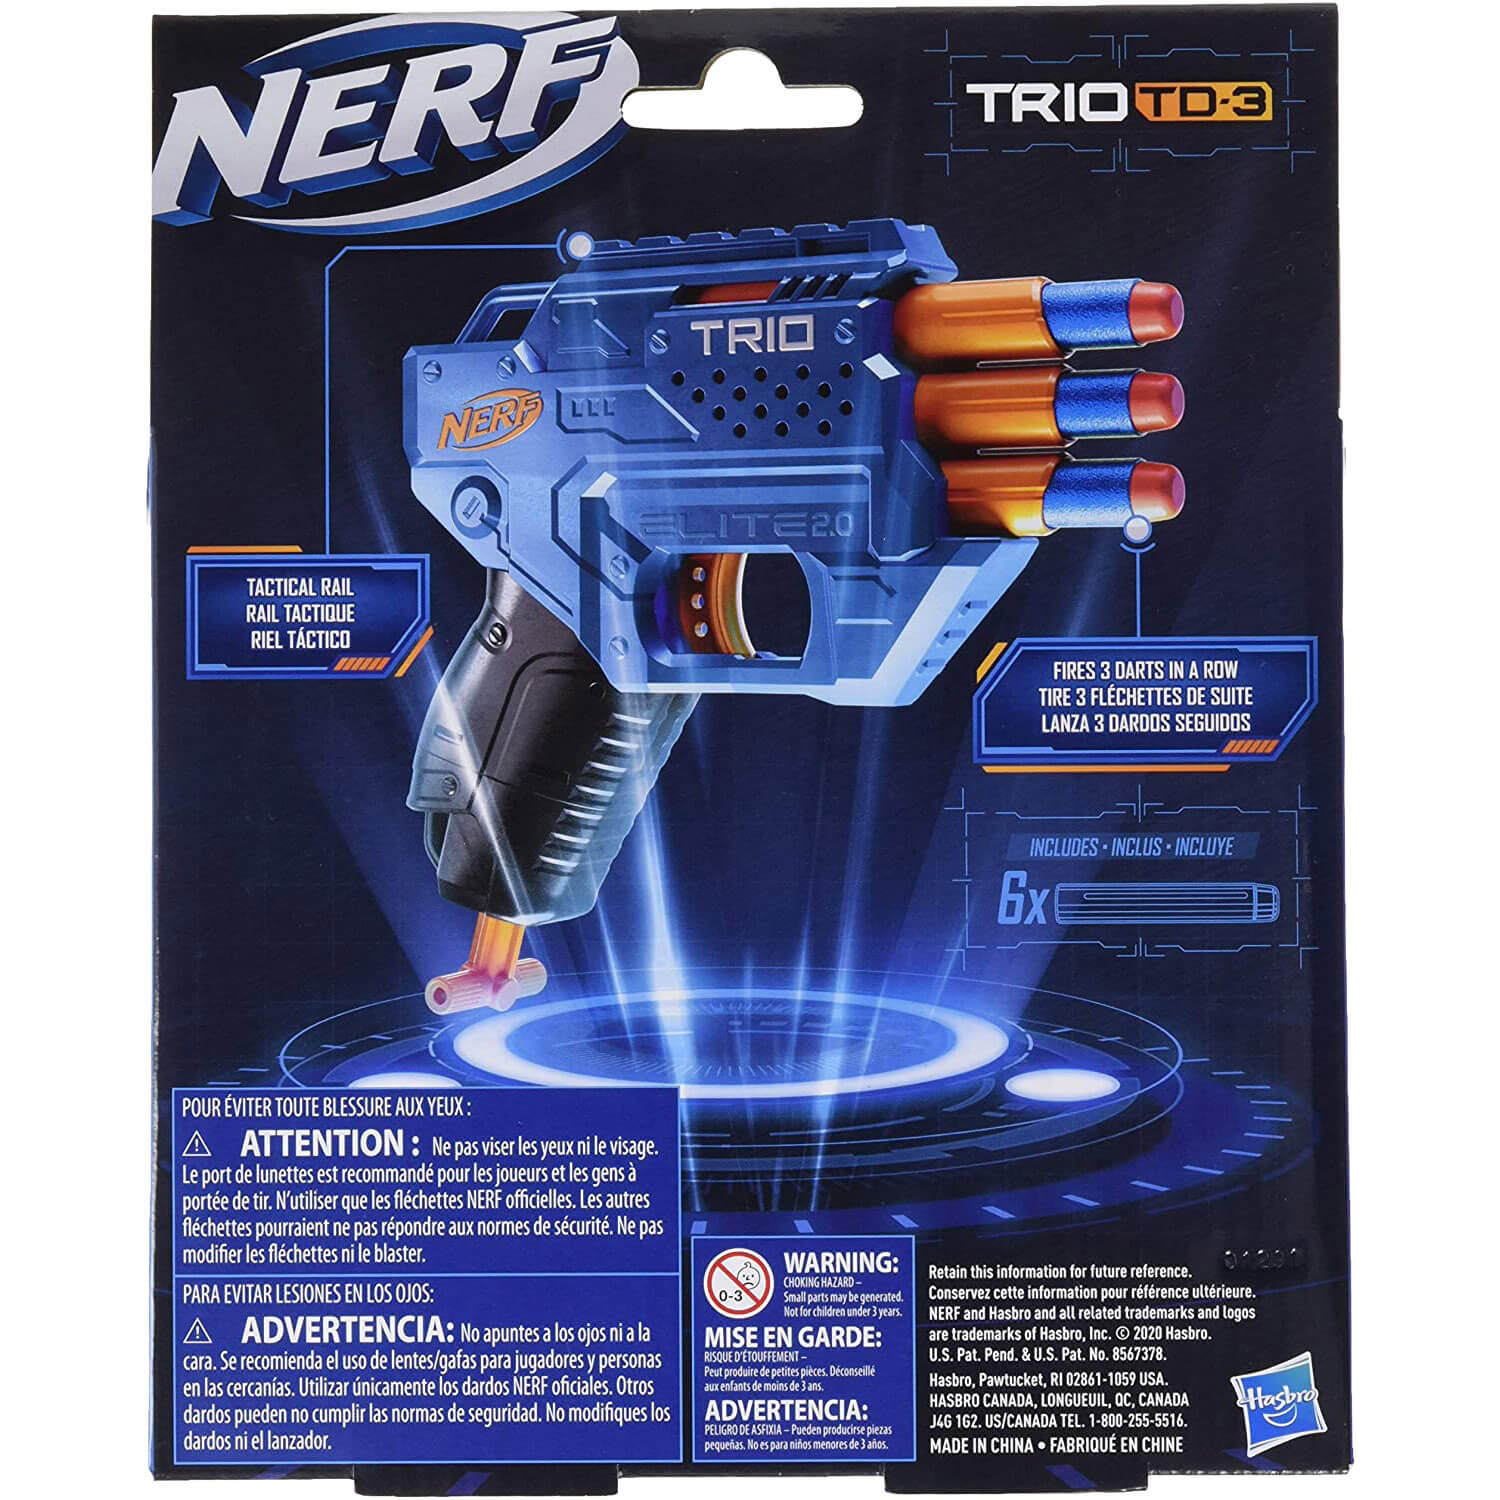 NERF Elite 2.0 Trio SD-3 3-Barrel Blaster